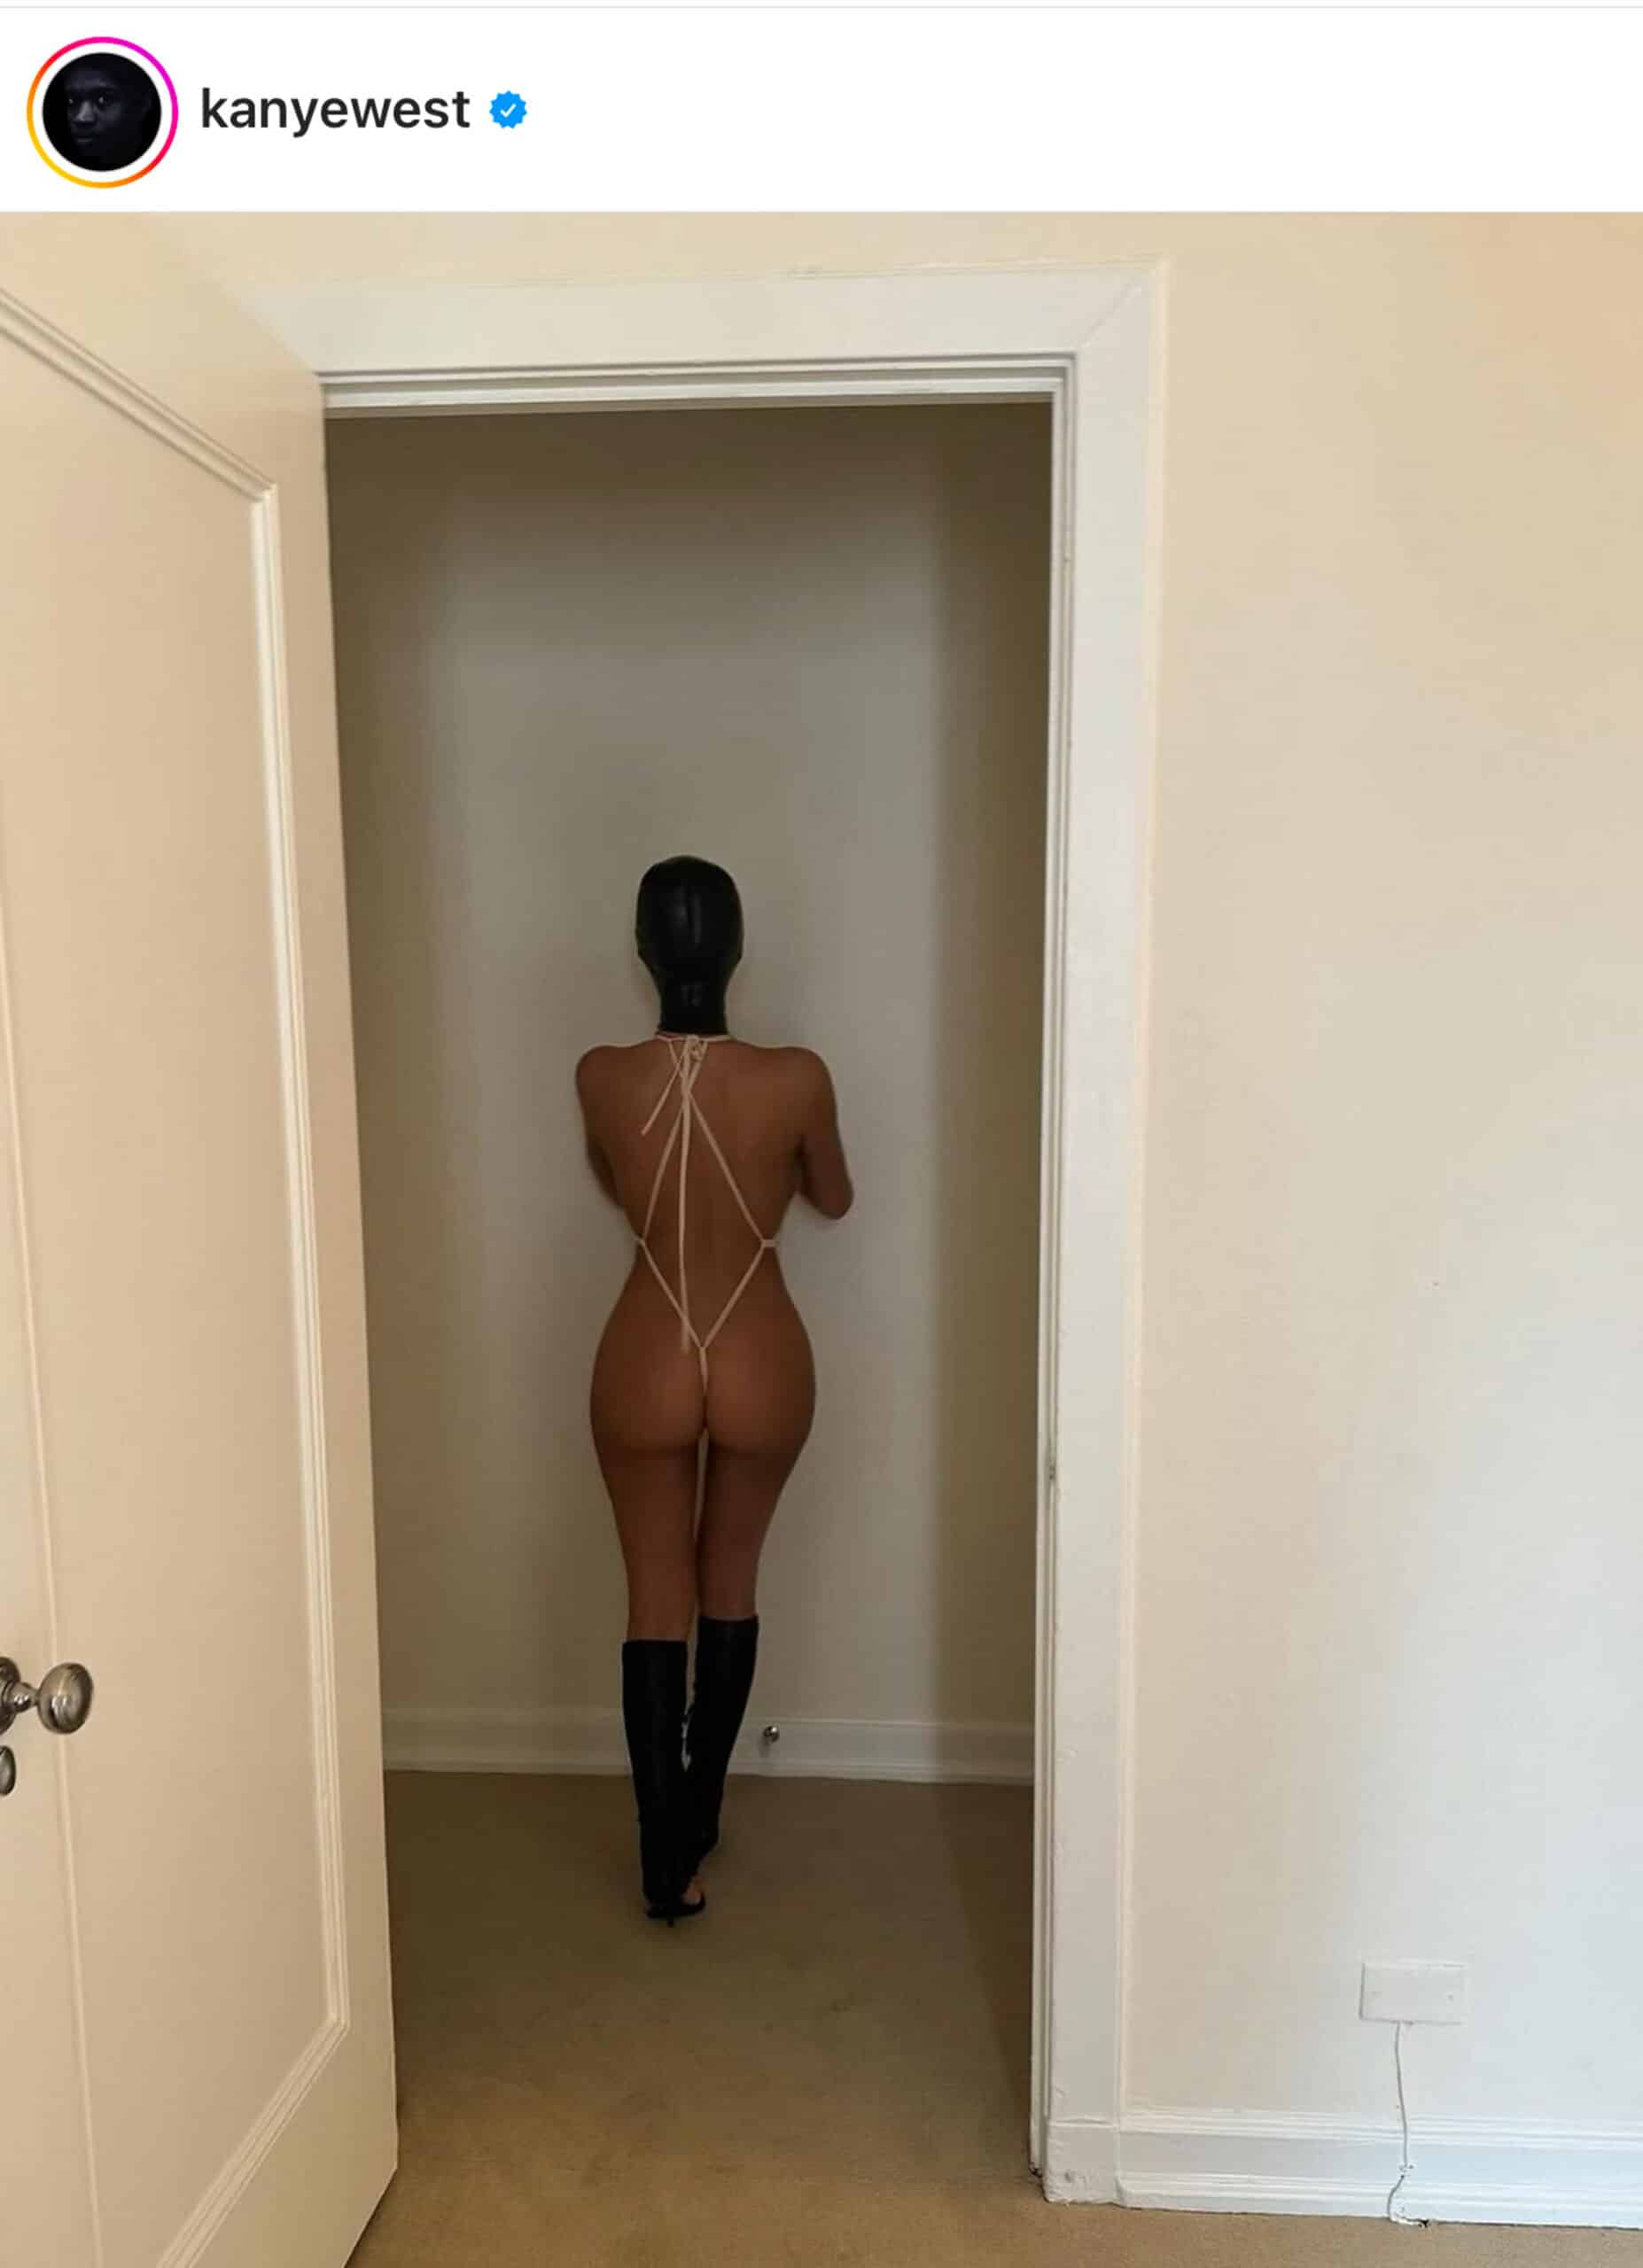 kanye west Bianca Censori string bikini instagram leather balenciaga